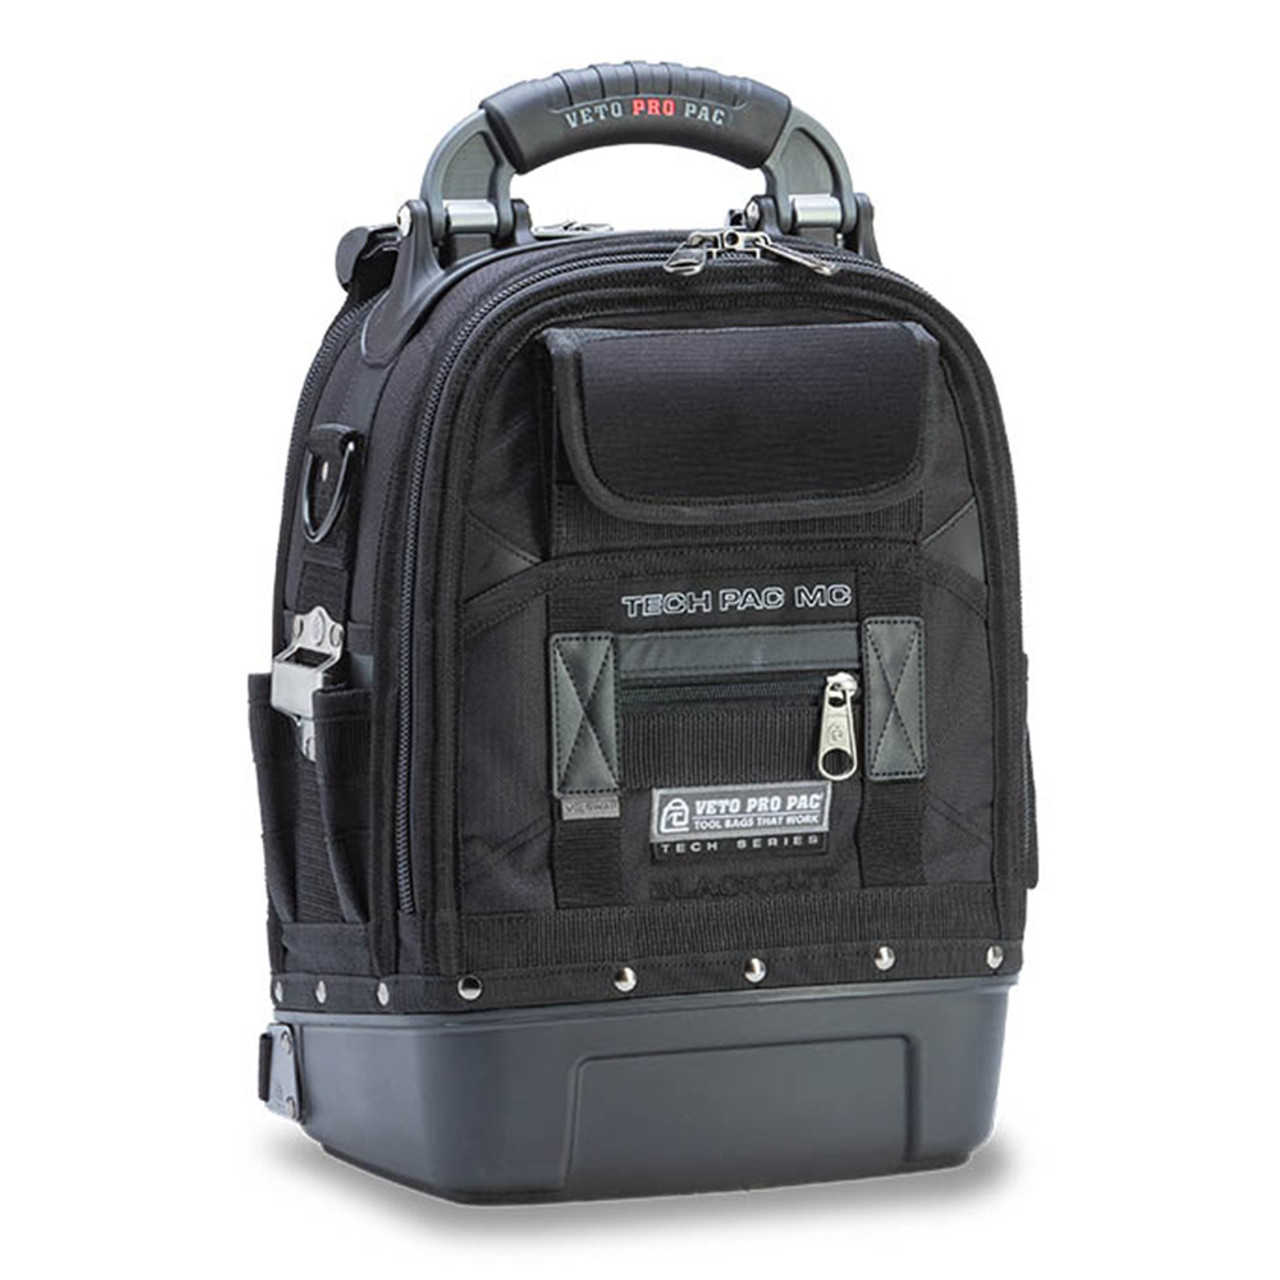 Veto Pro Pac TECH PAC MC Blackout Small Customizable Tool Backpack